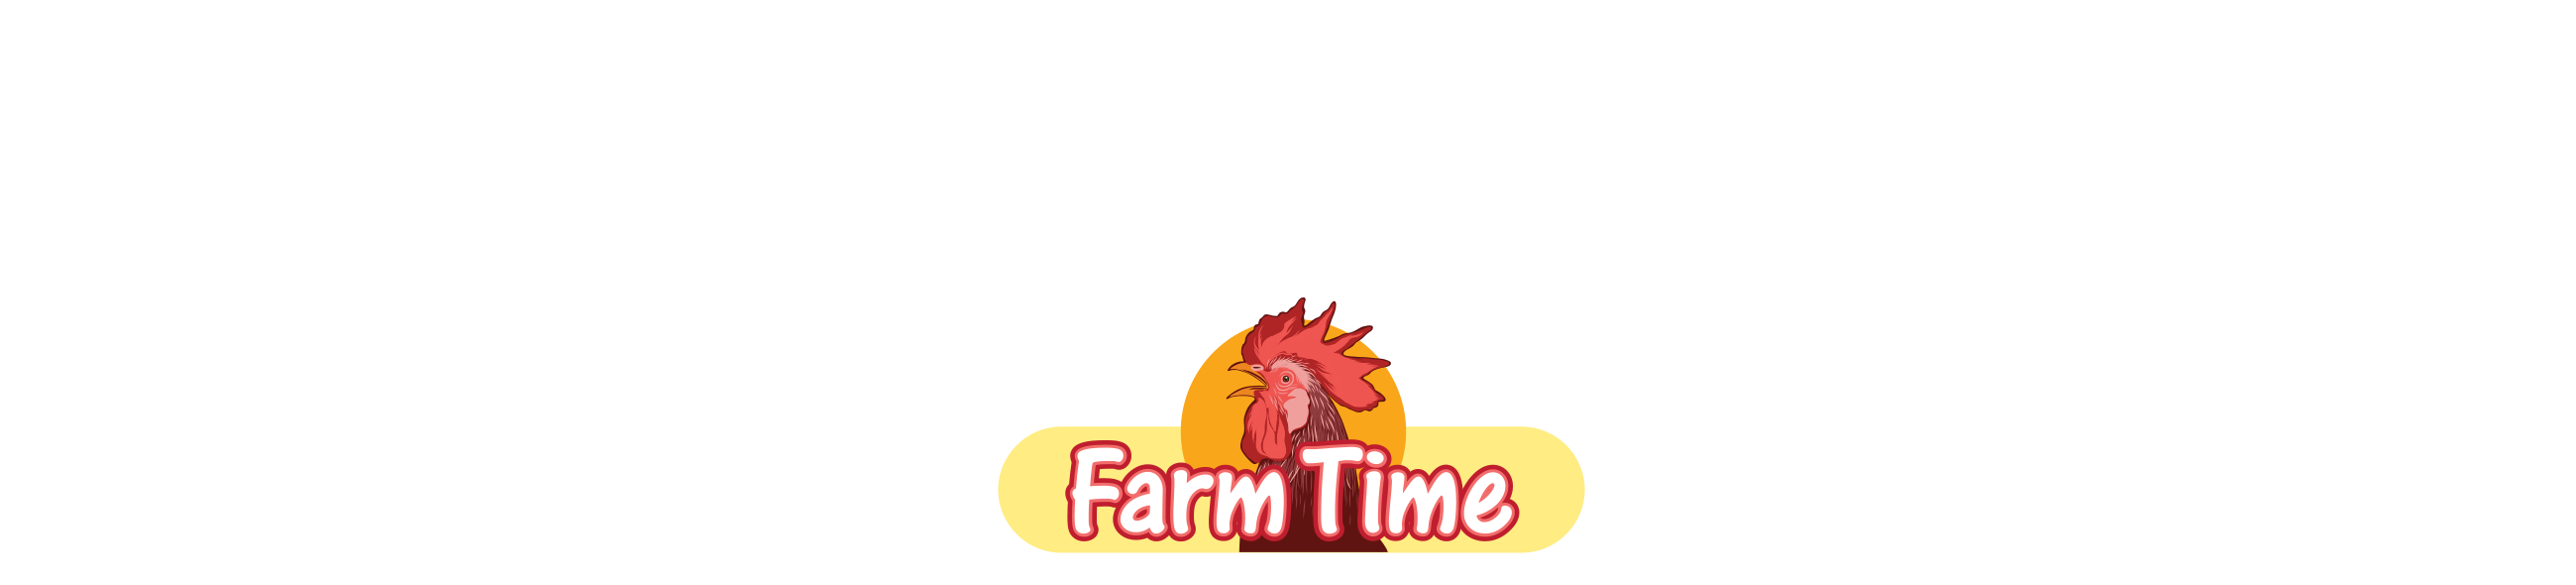 Farm Time